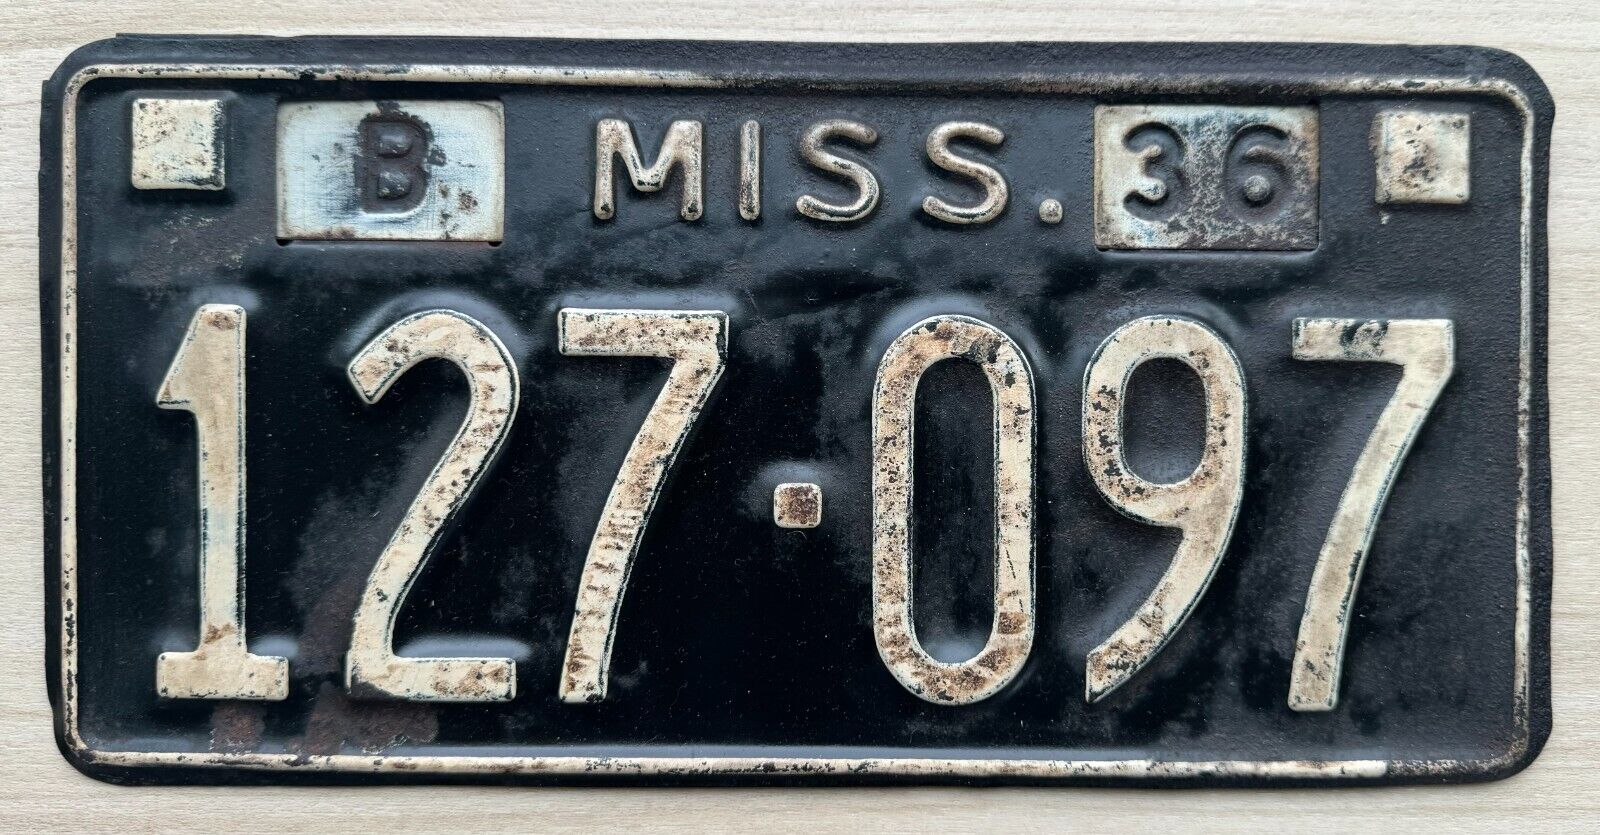 1936 Mississippi License Plate - Nice Original Paint